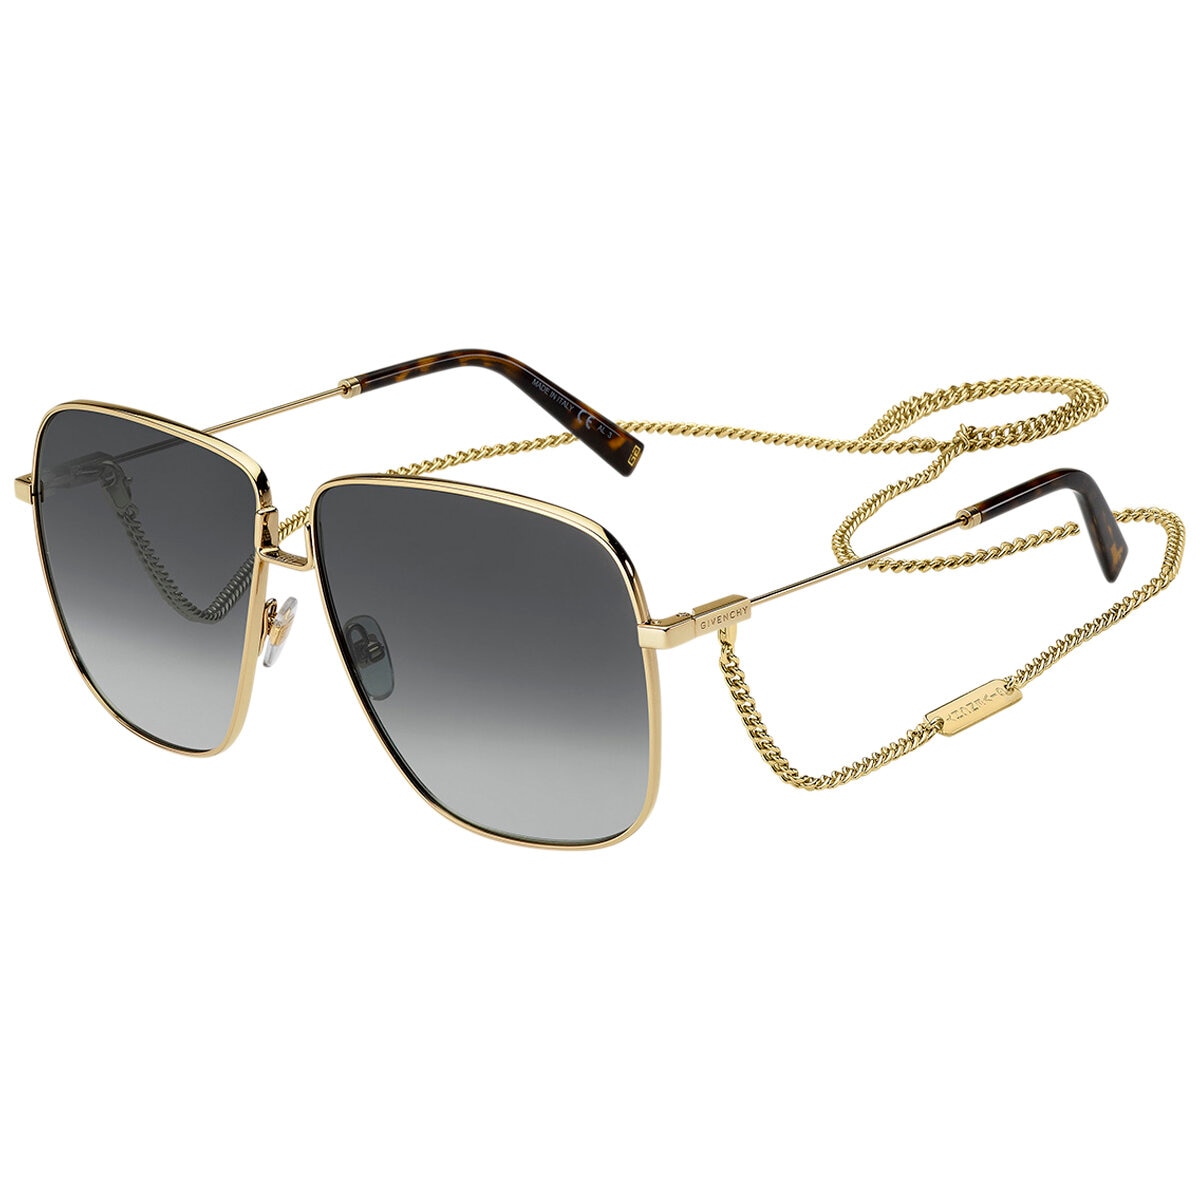 Givenchy GV7183 S Women’s Sunglasses